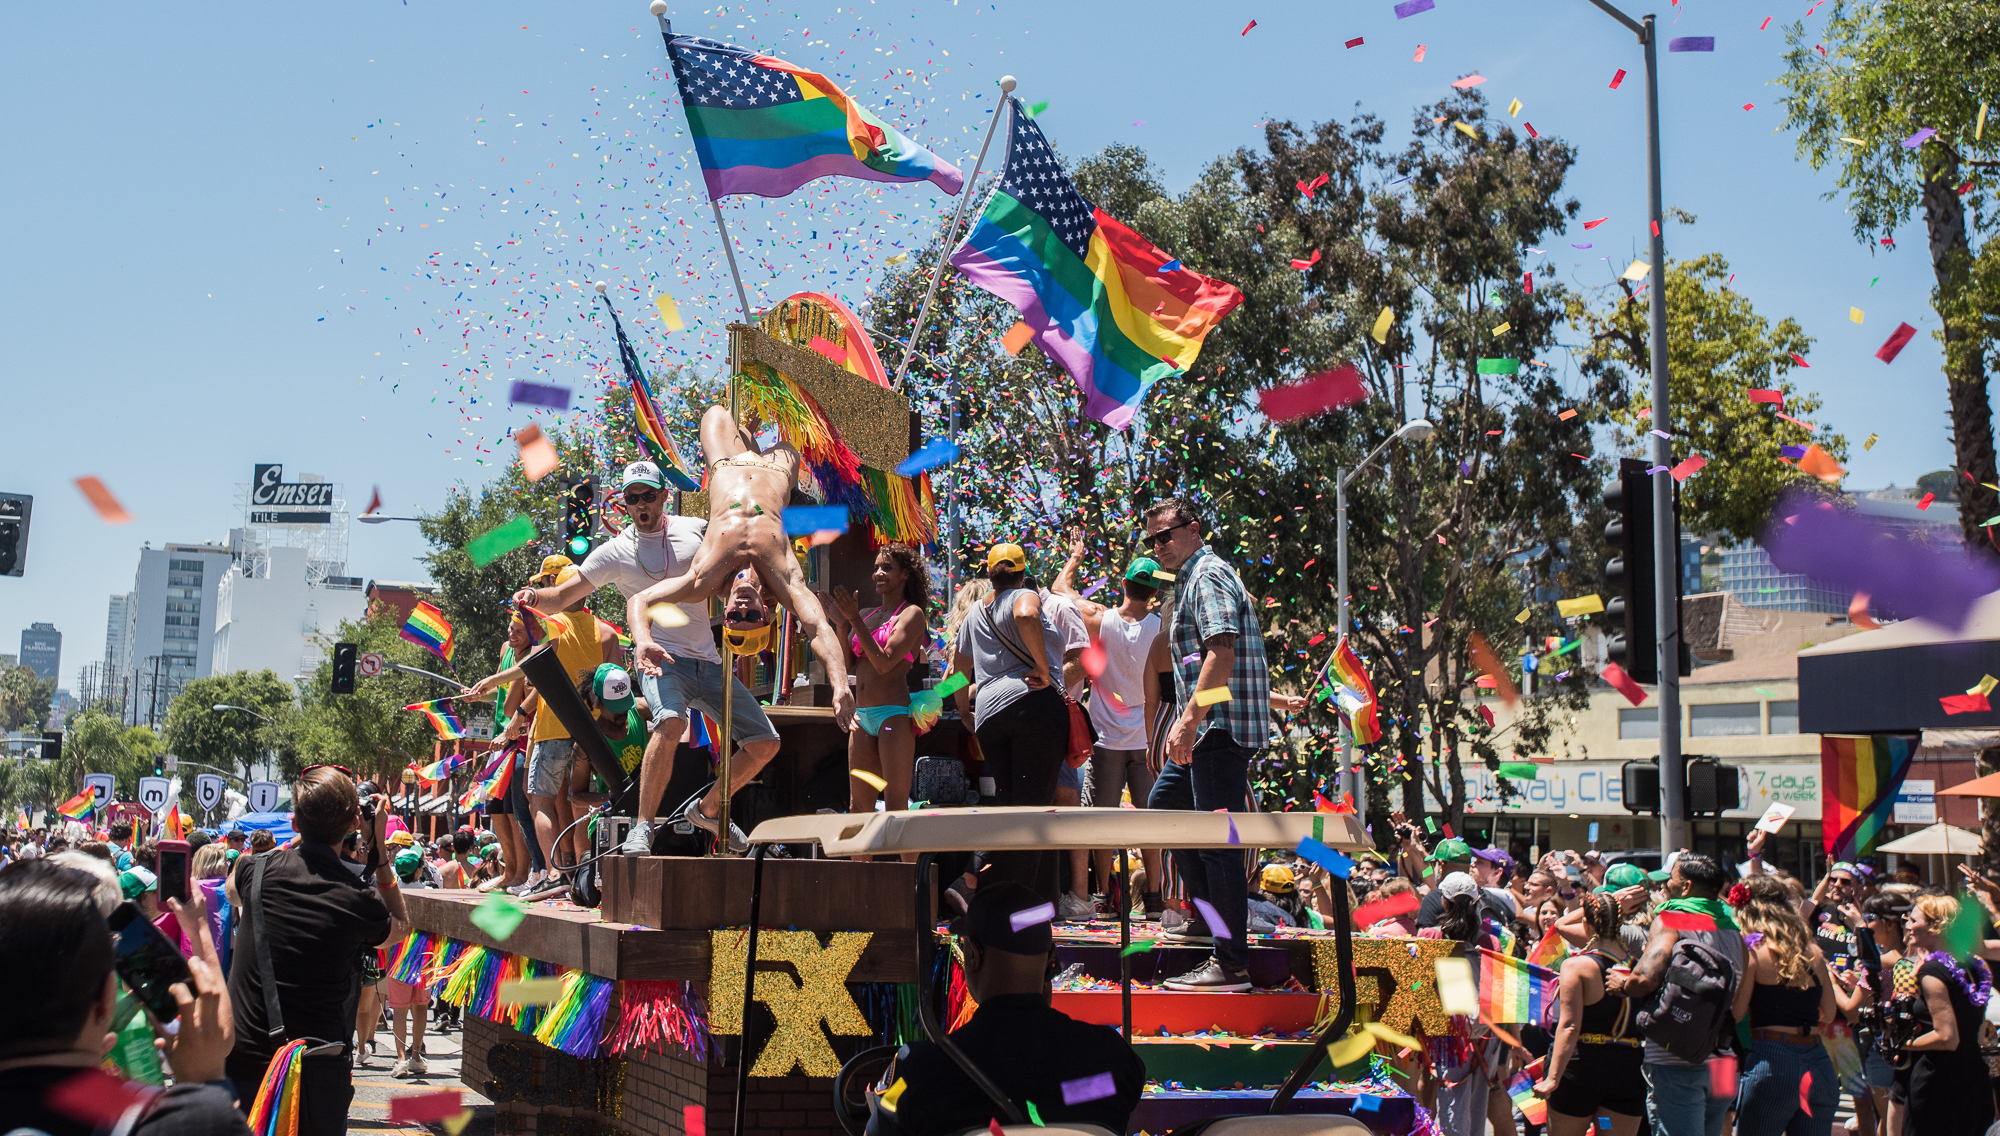 LA Dodgers, LA Pride team up to host LGBTQ Pride night